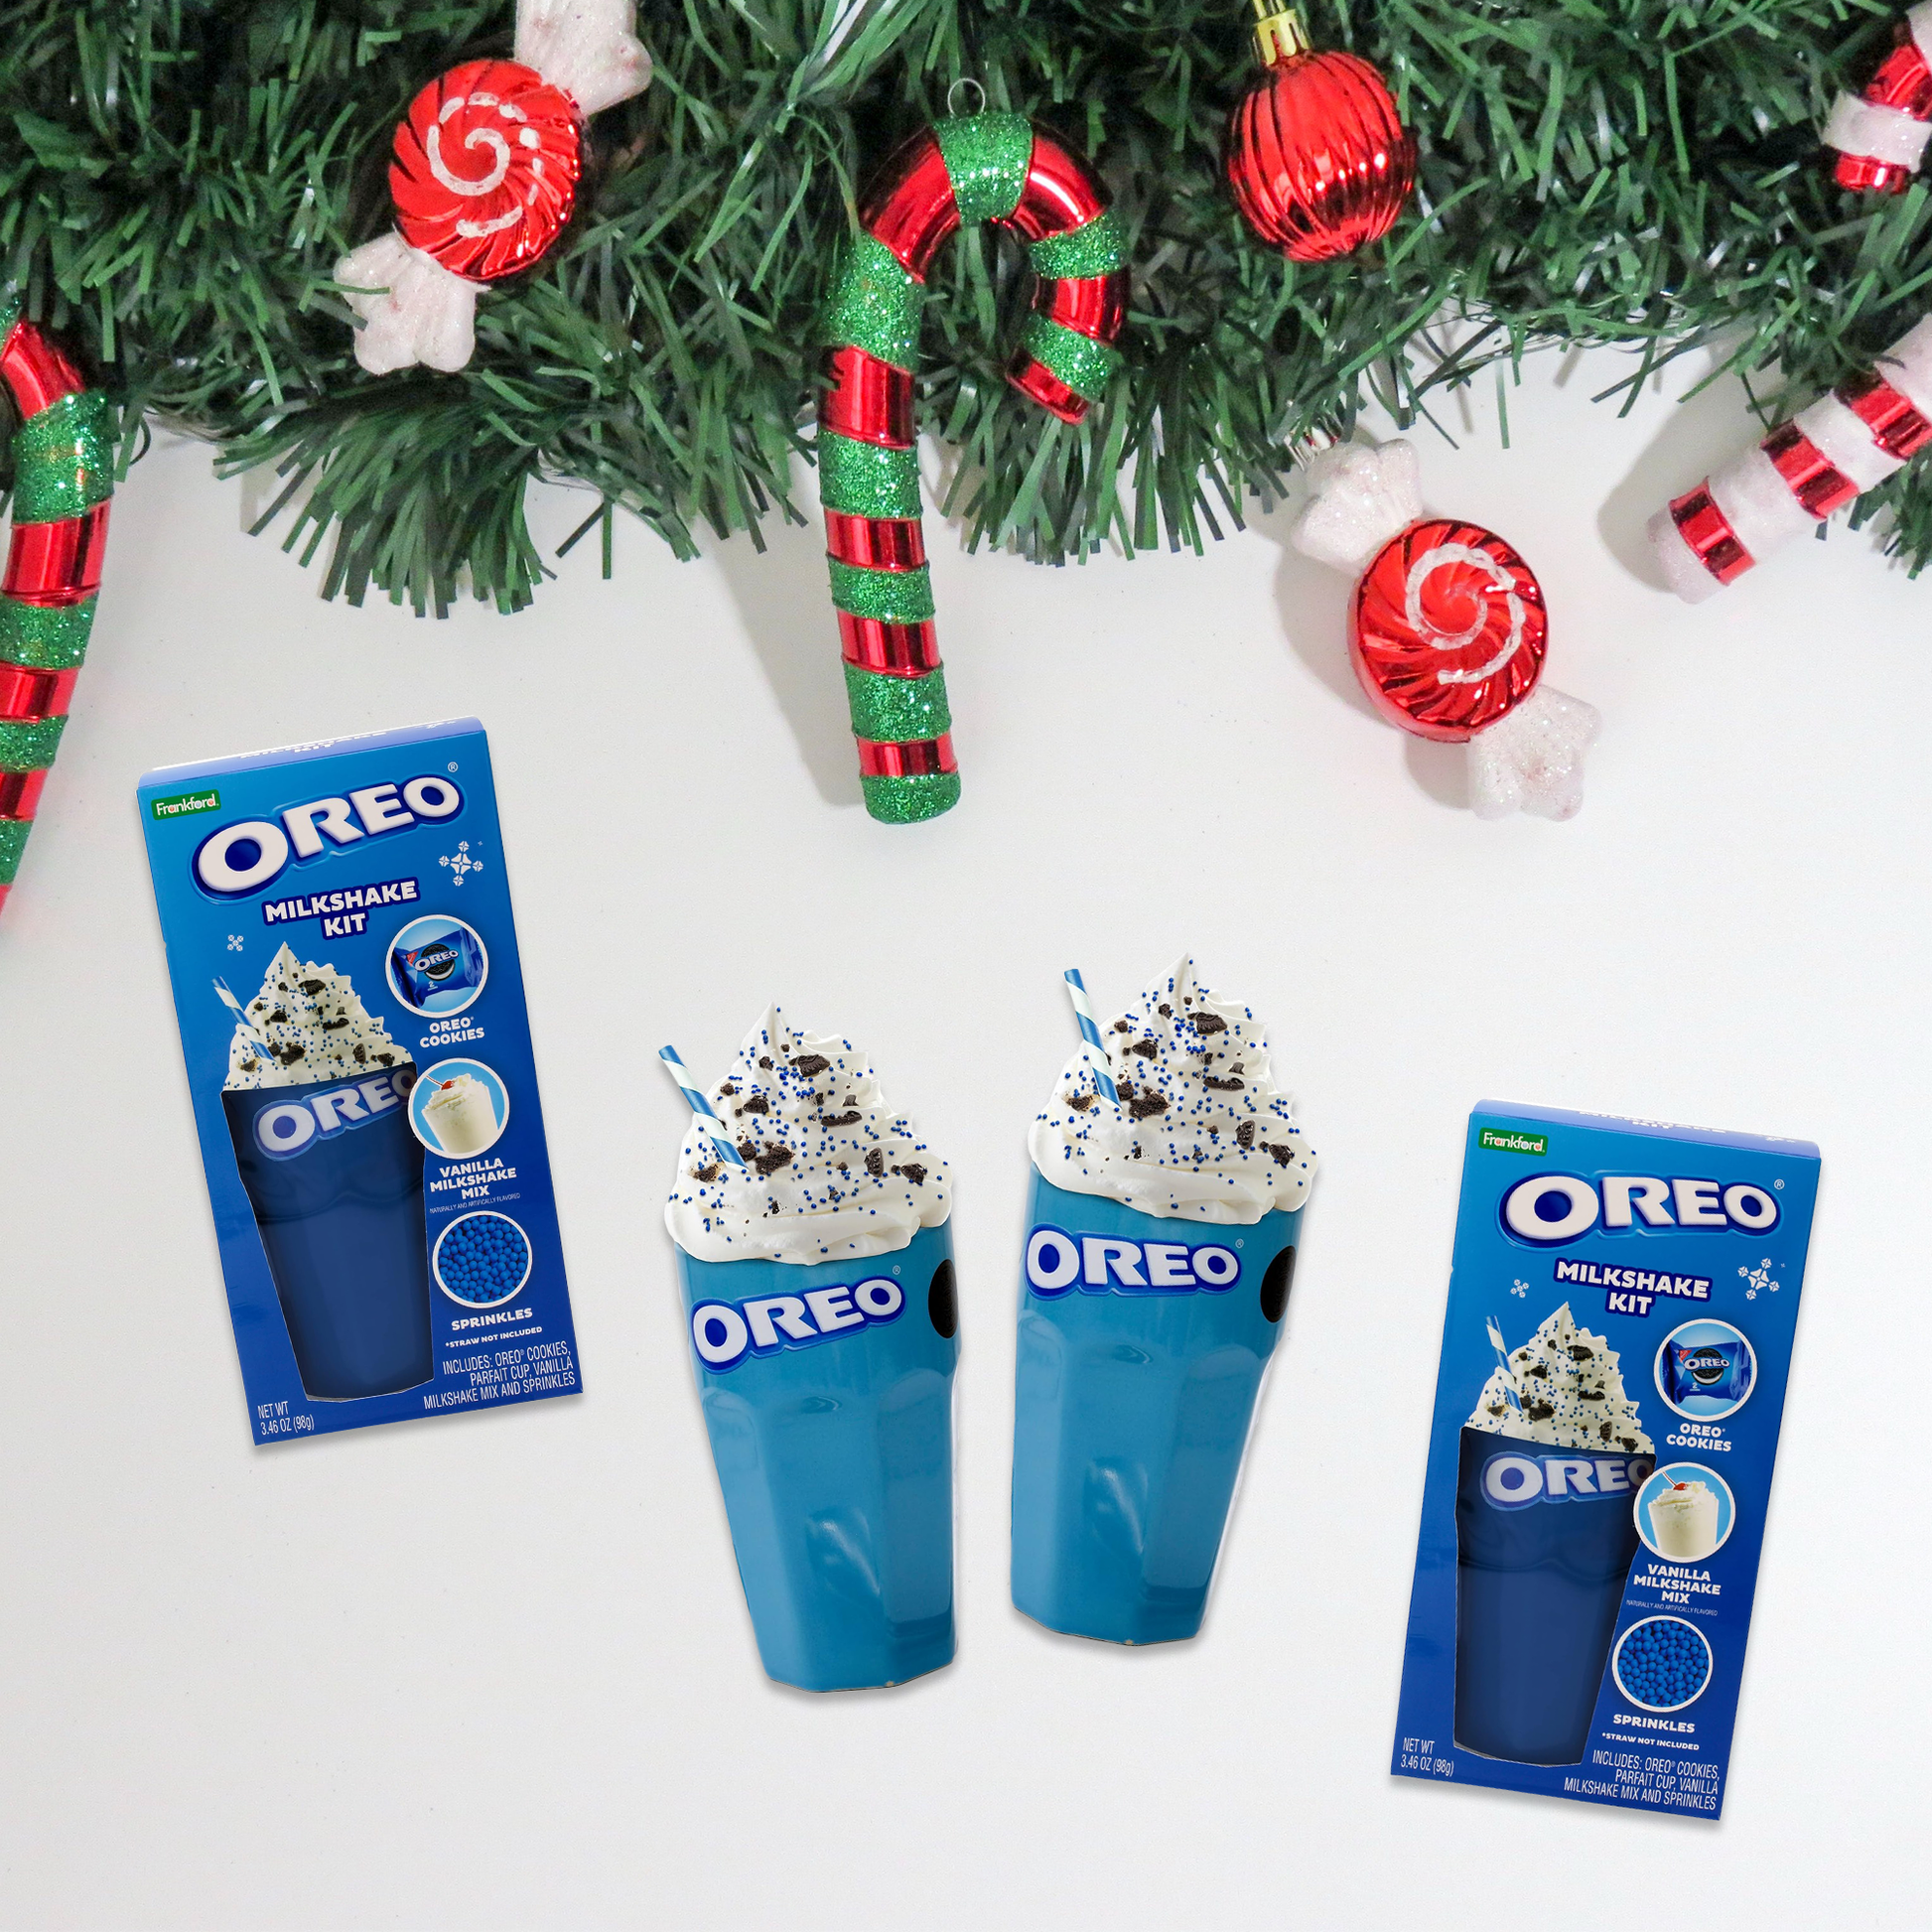 OREO Milkshake Kit Gift Set